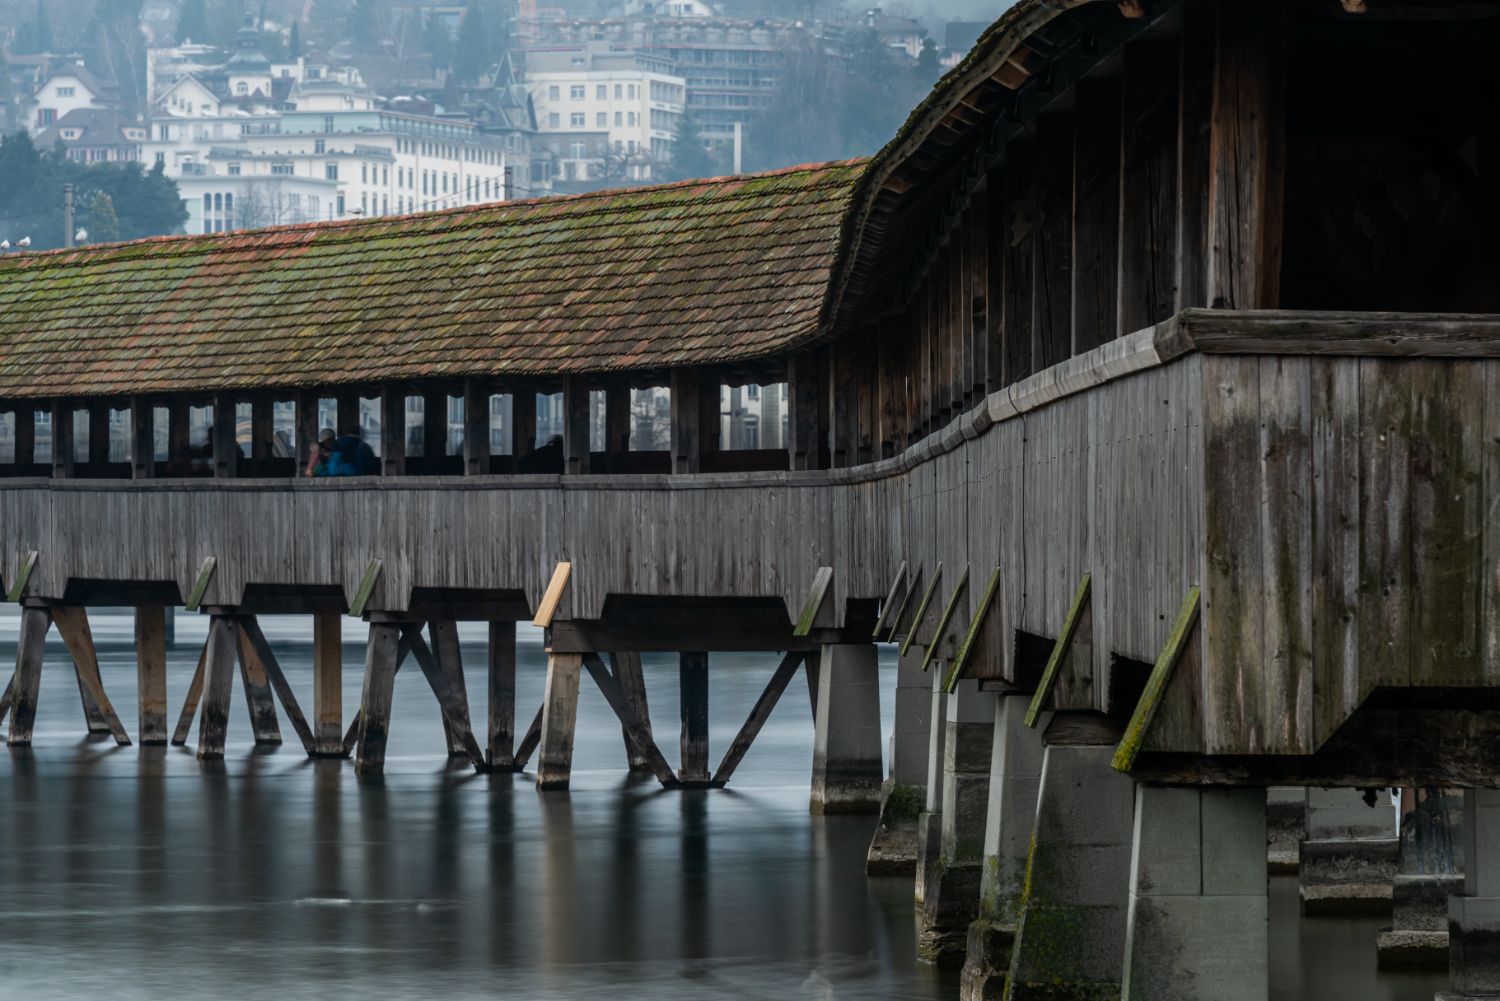 Chapel Bridge in Lucerne